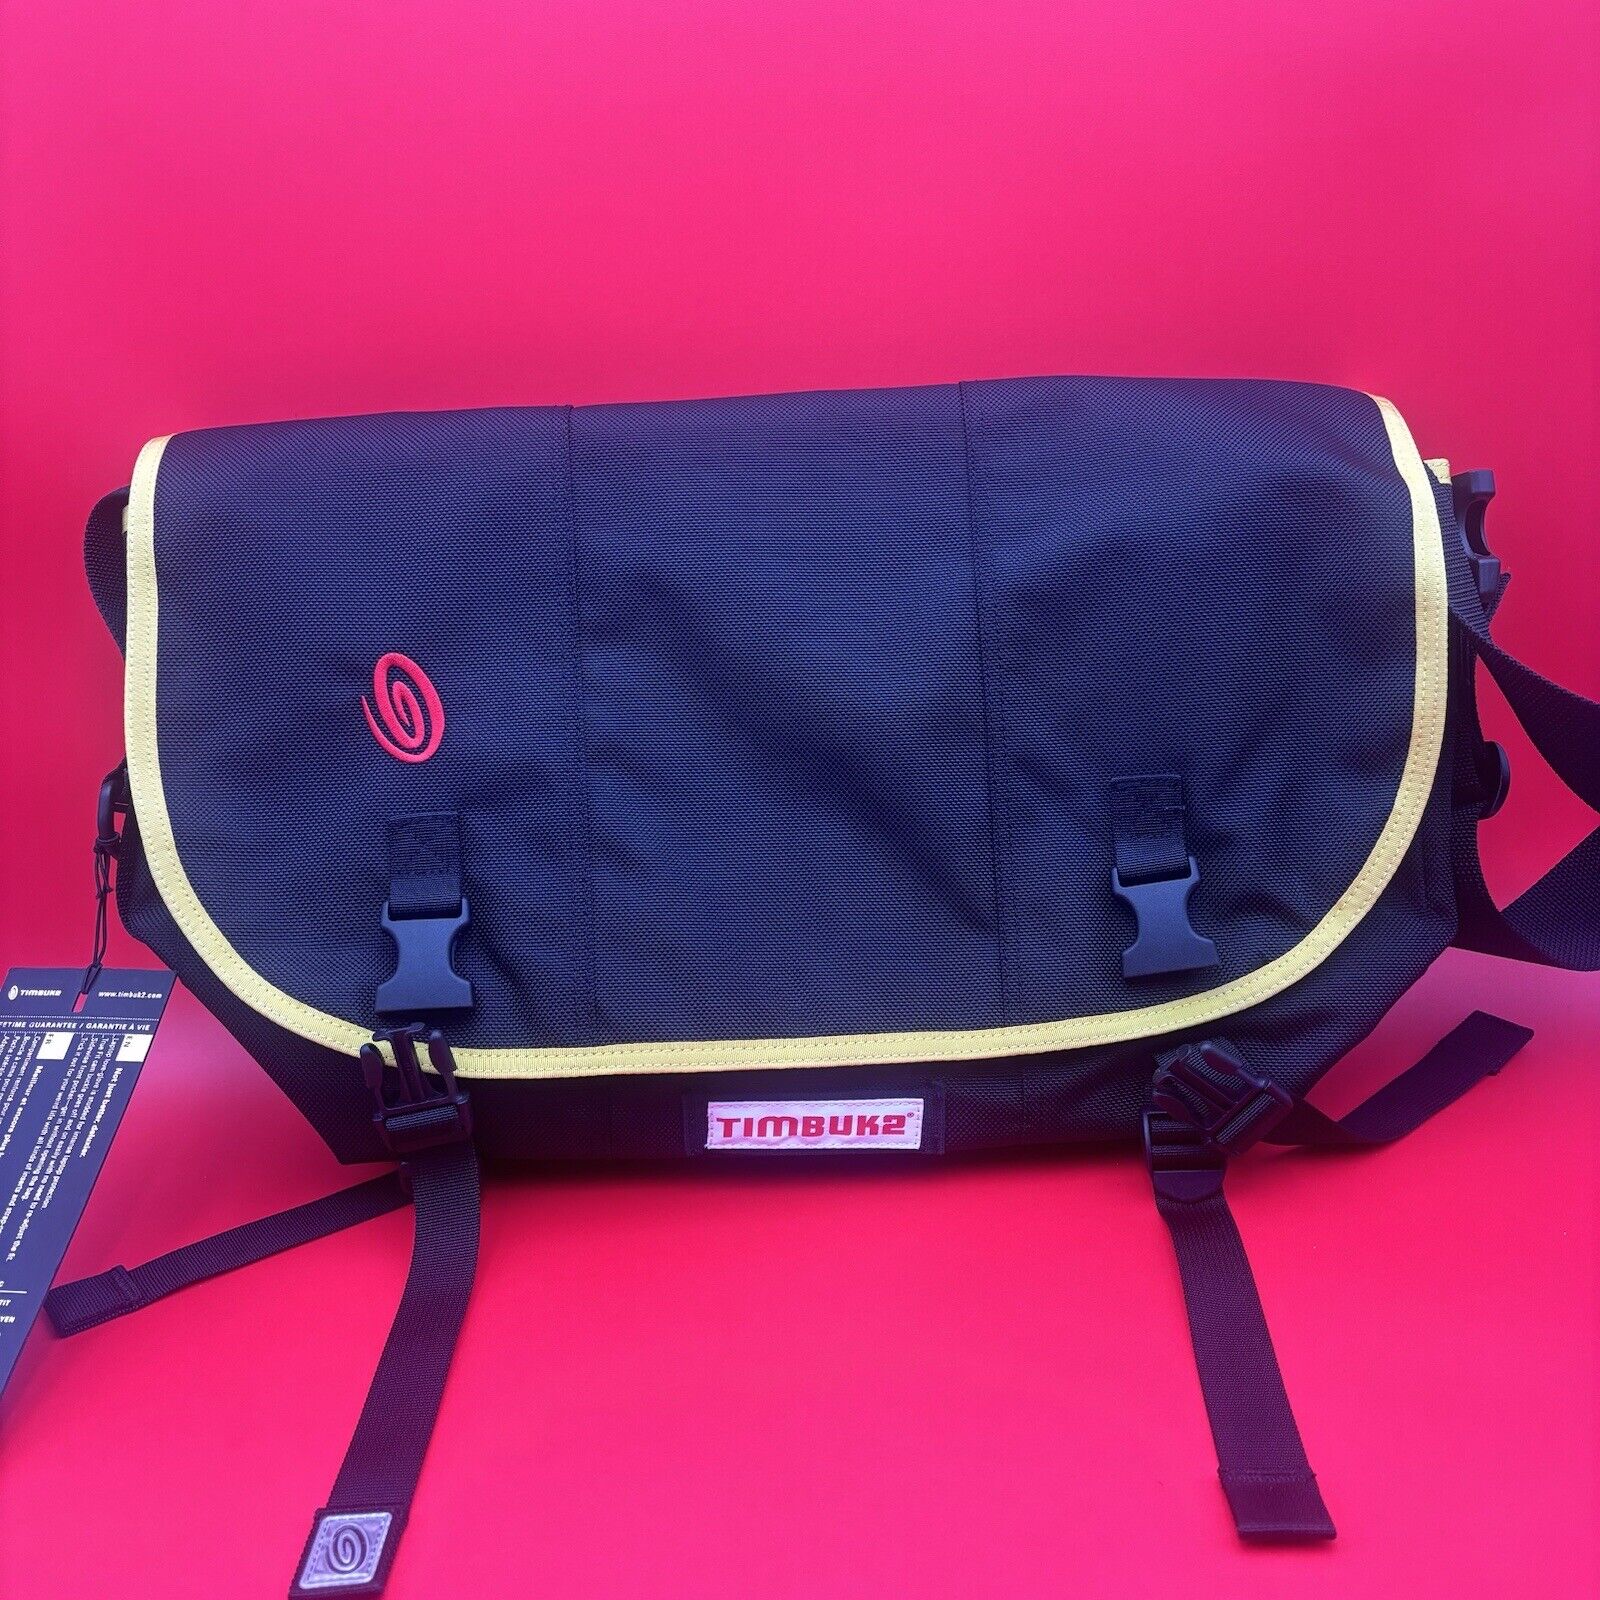 Timbuk2 Messenger Bag travel  - Medium - Custom Coloring laptop protection black